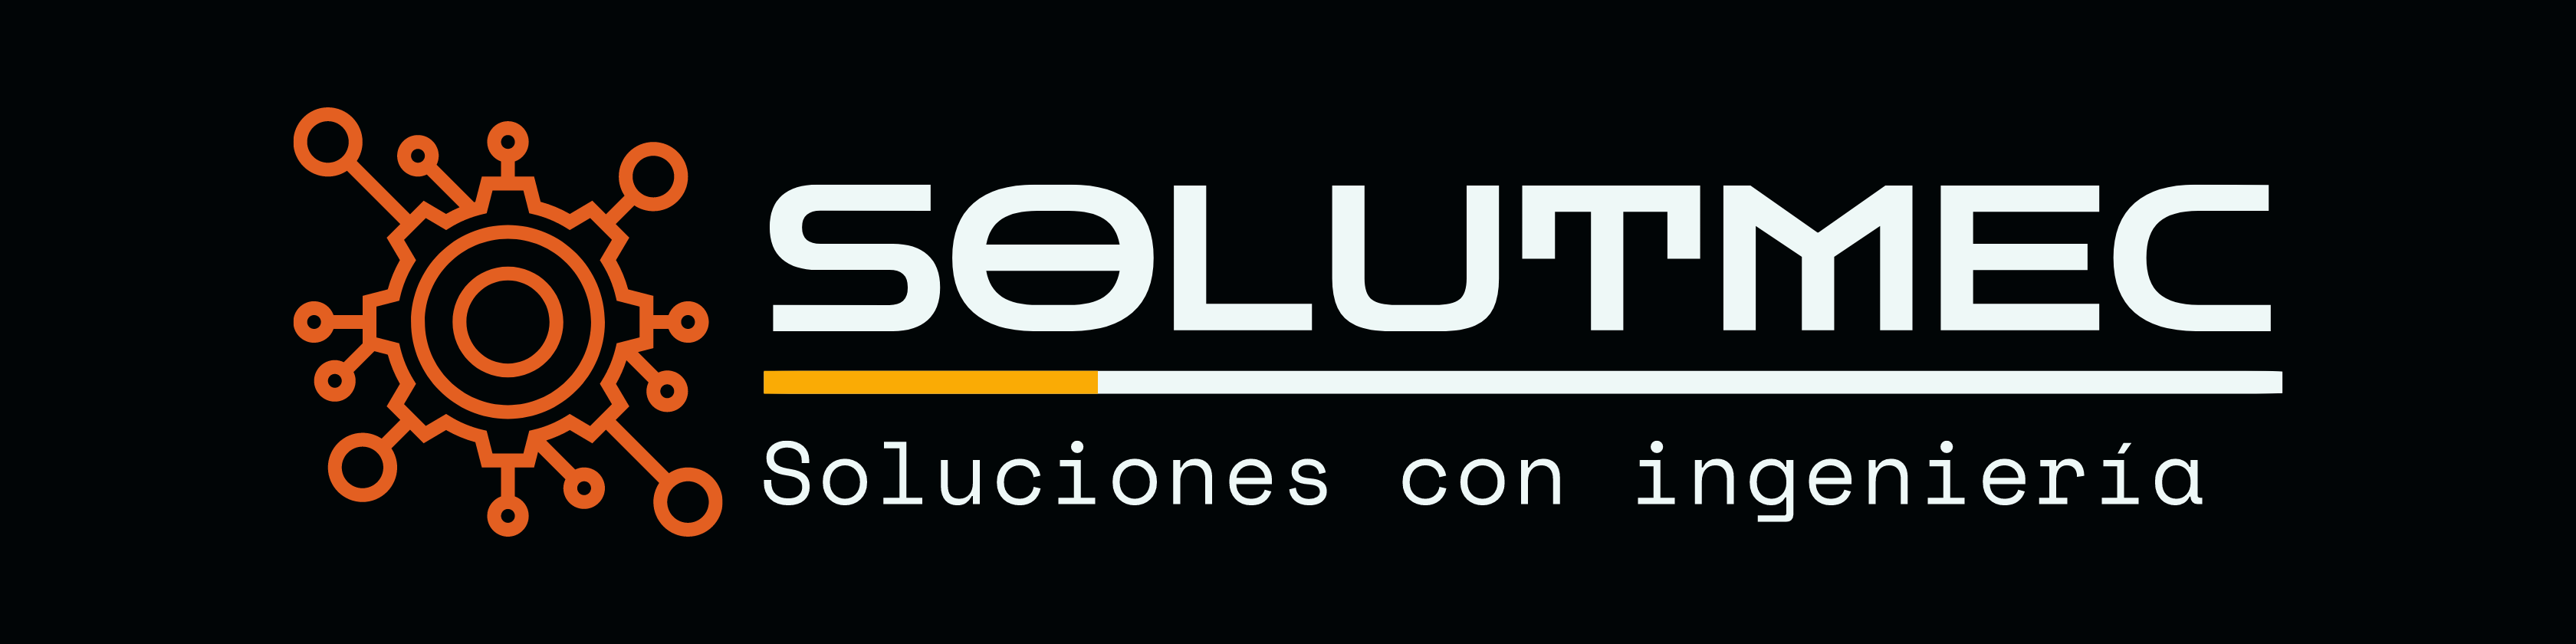 Solutmec Logo